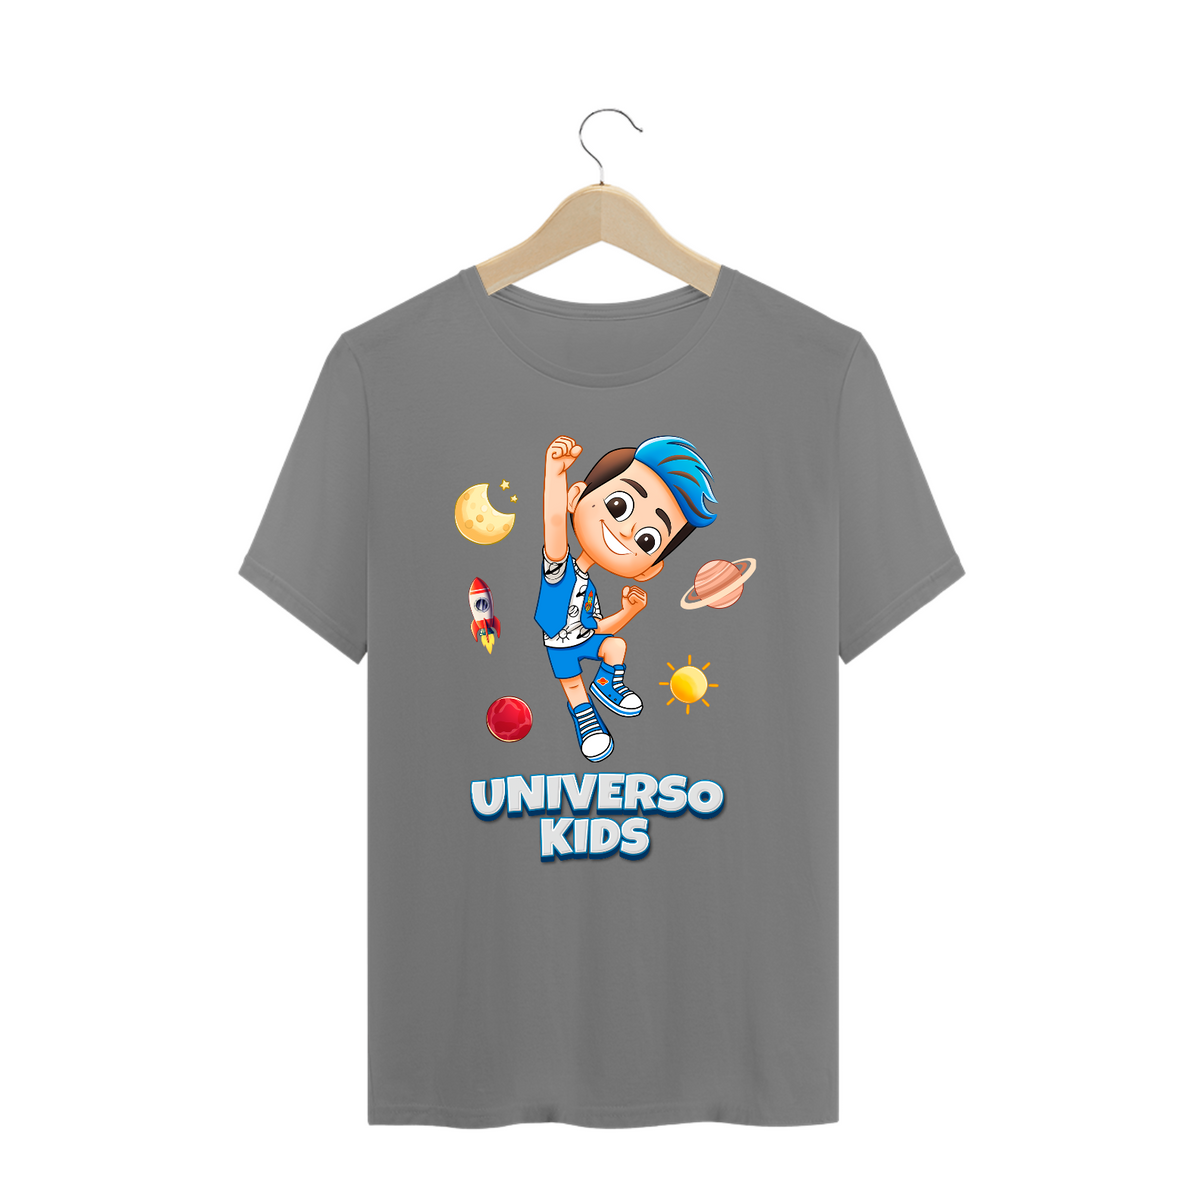 Nome do produto: Camiseta Plus Size Universo kids VAMOS NESSA!